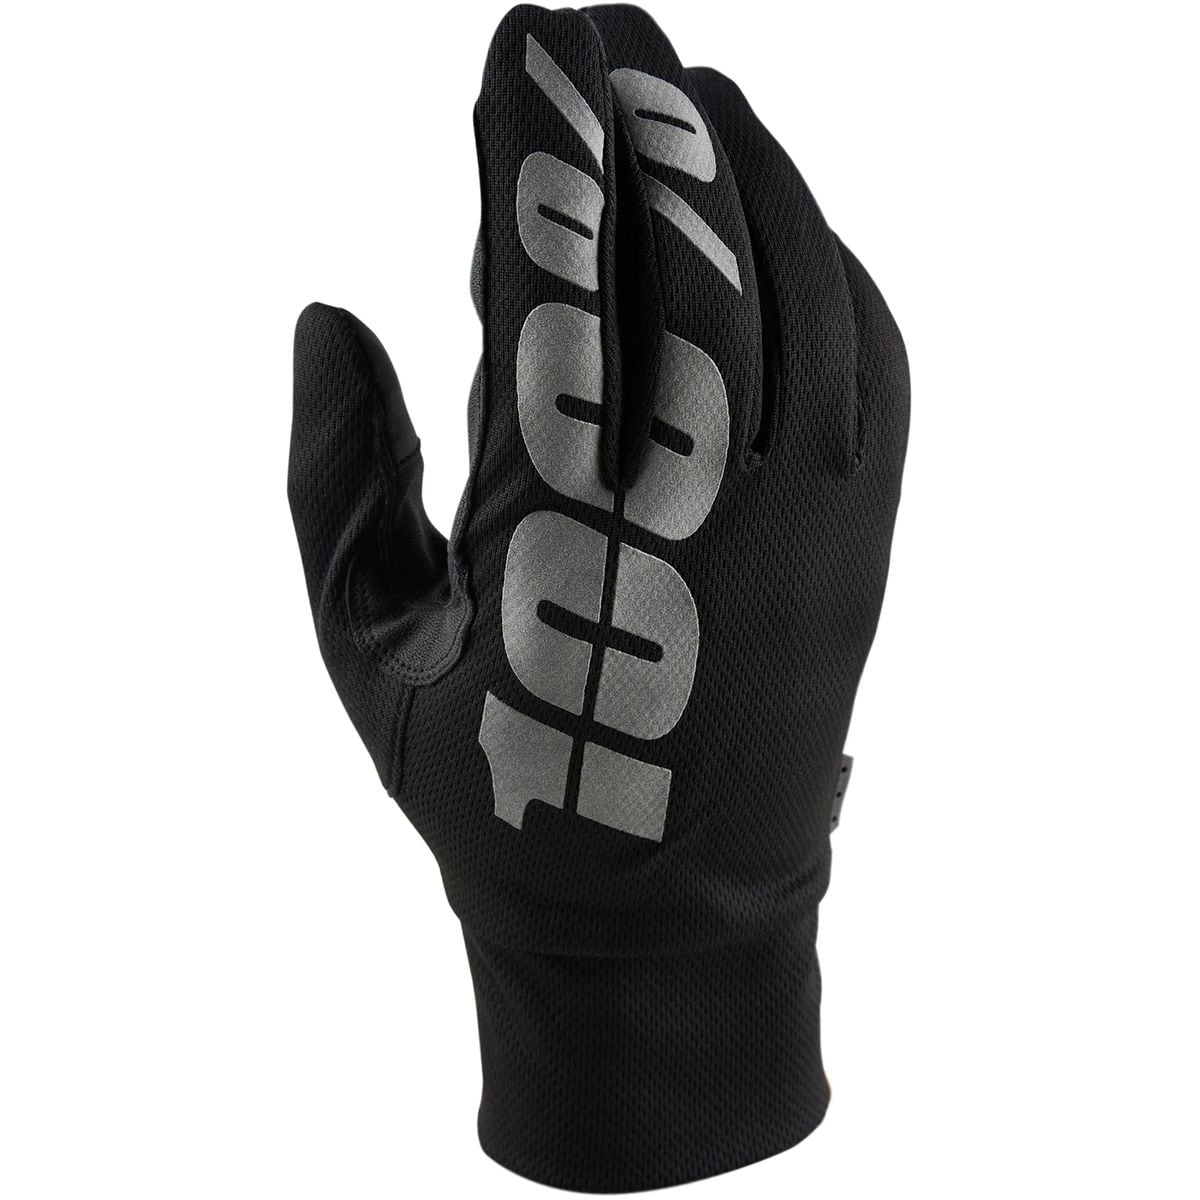 100% Hydromatic Glove - Men's